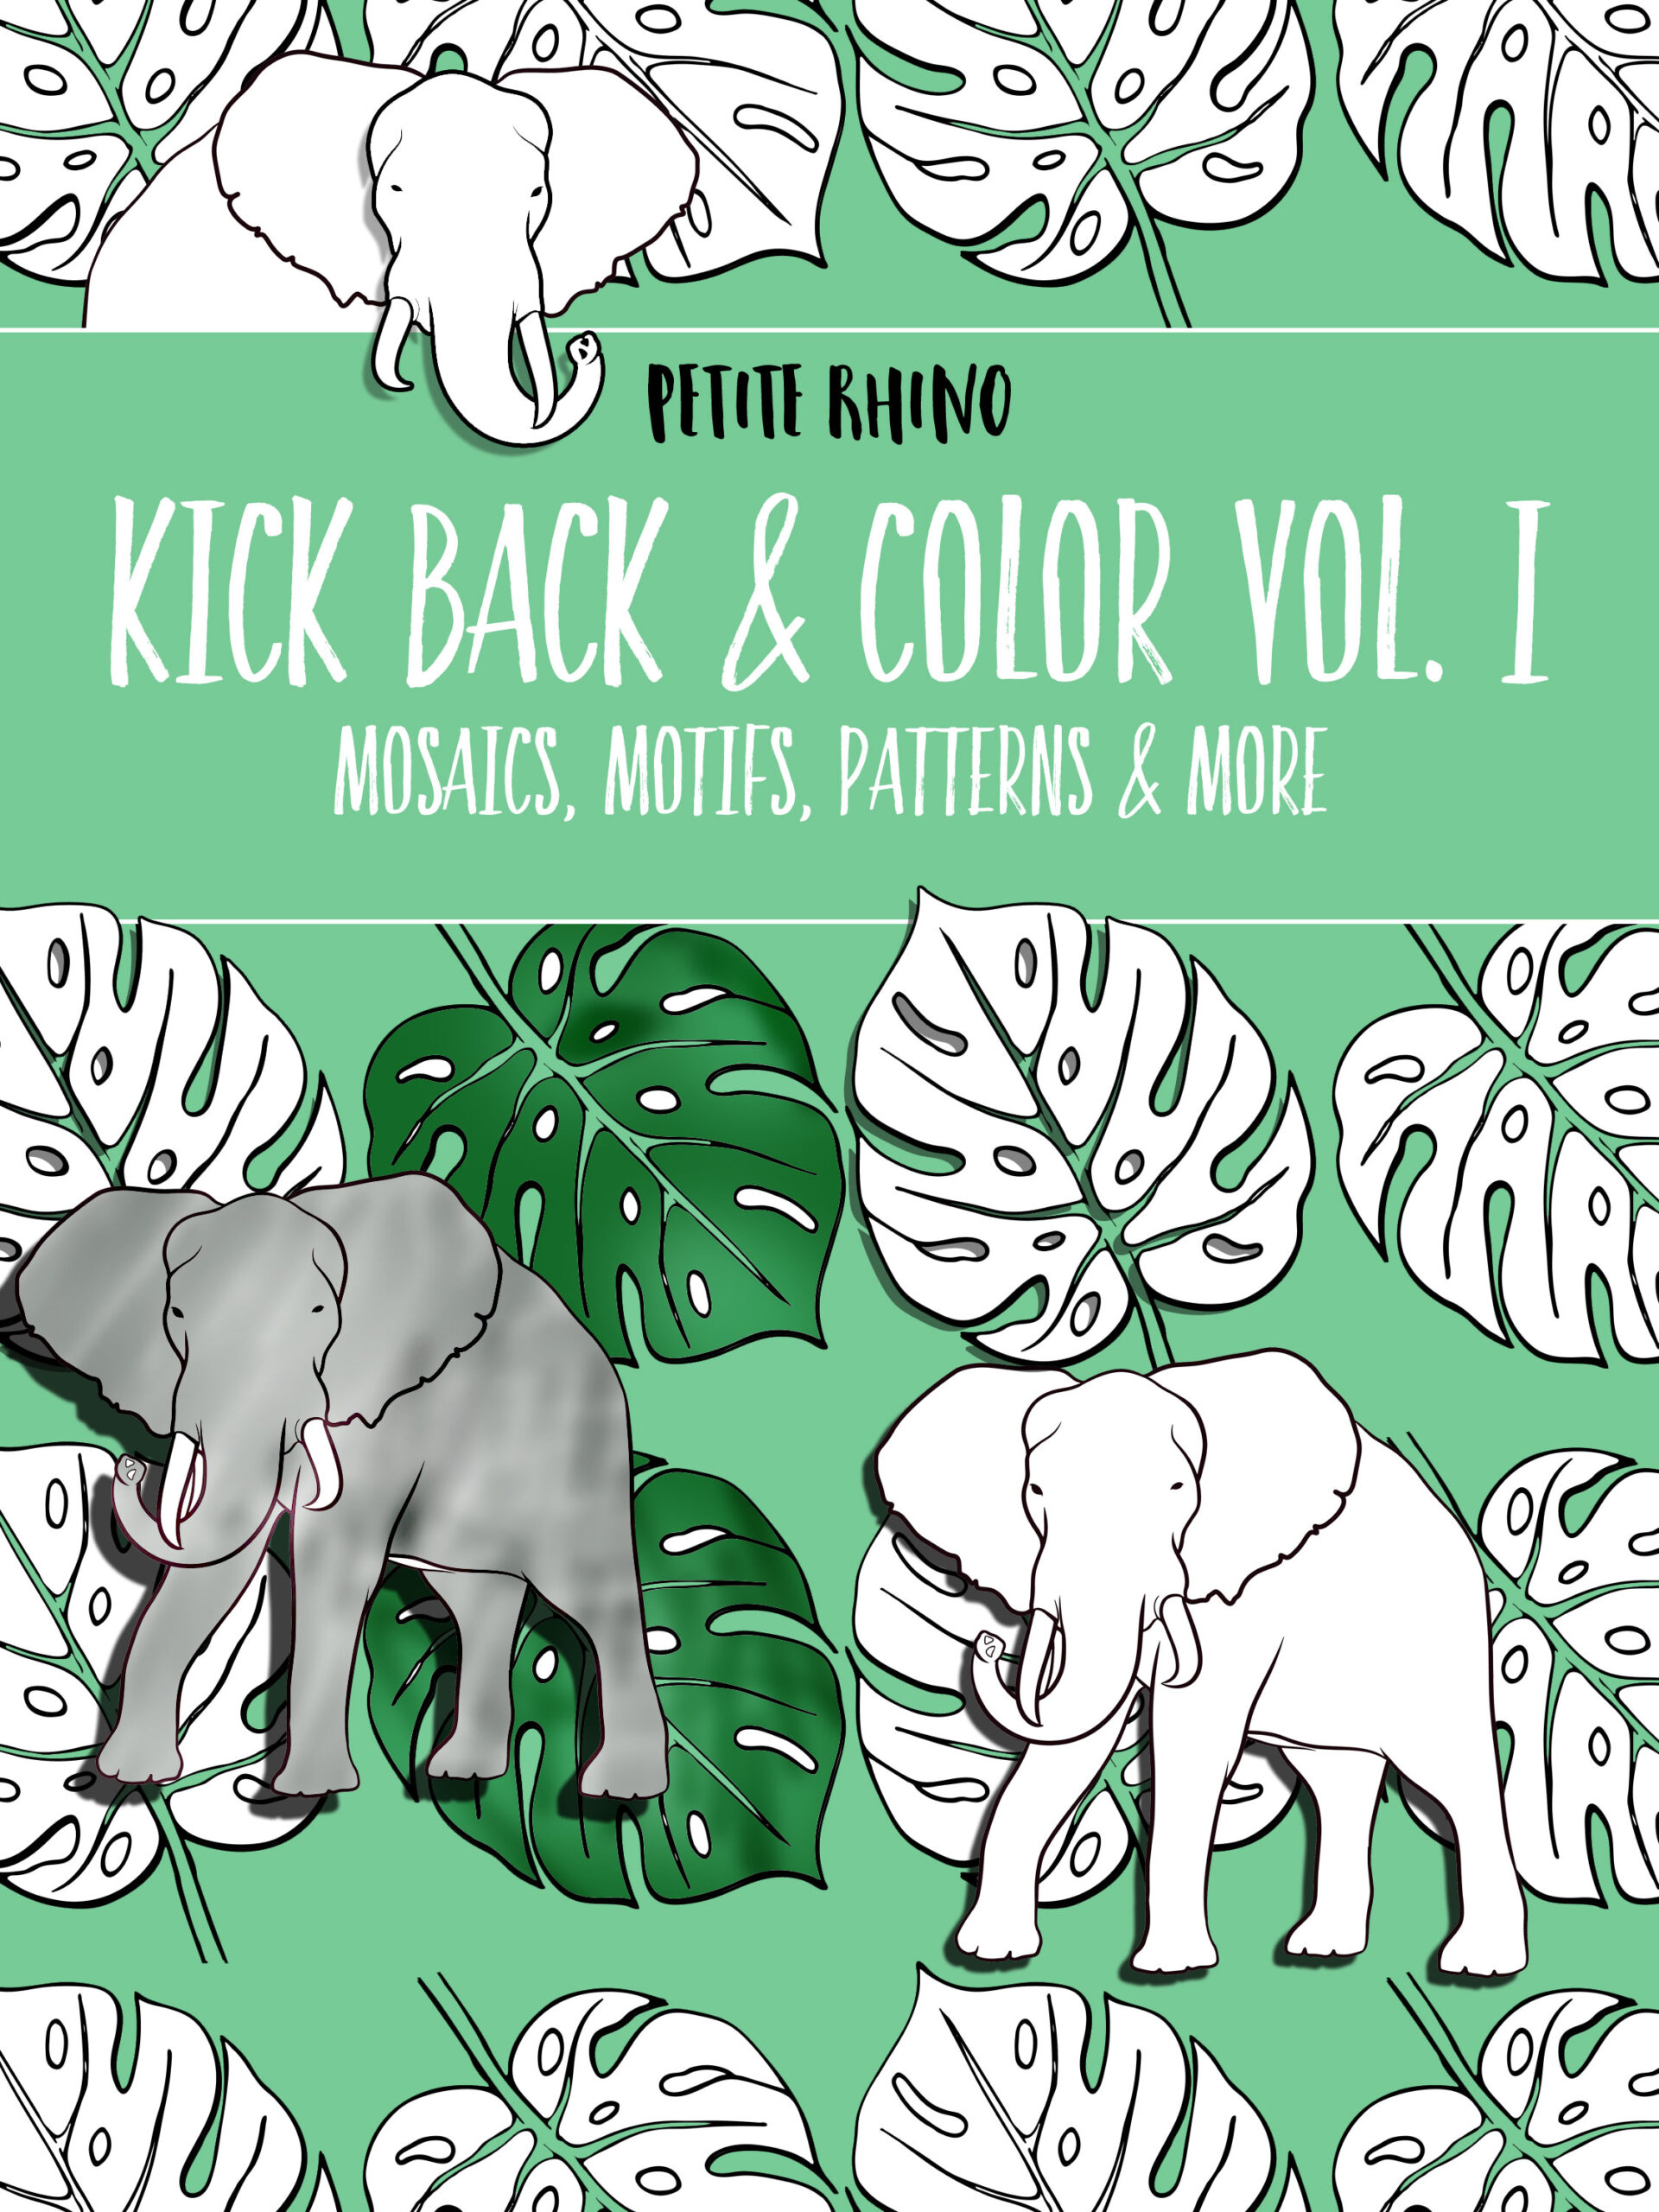 kick back & color book cover